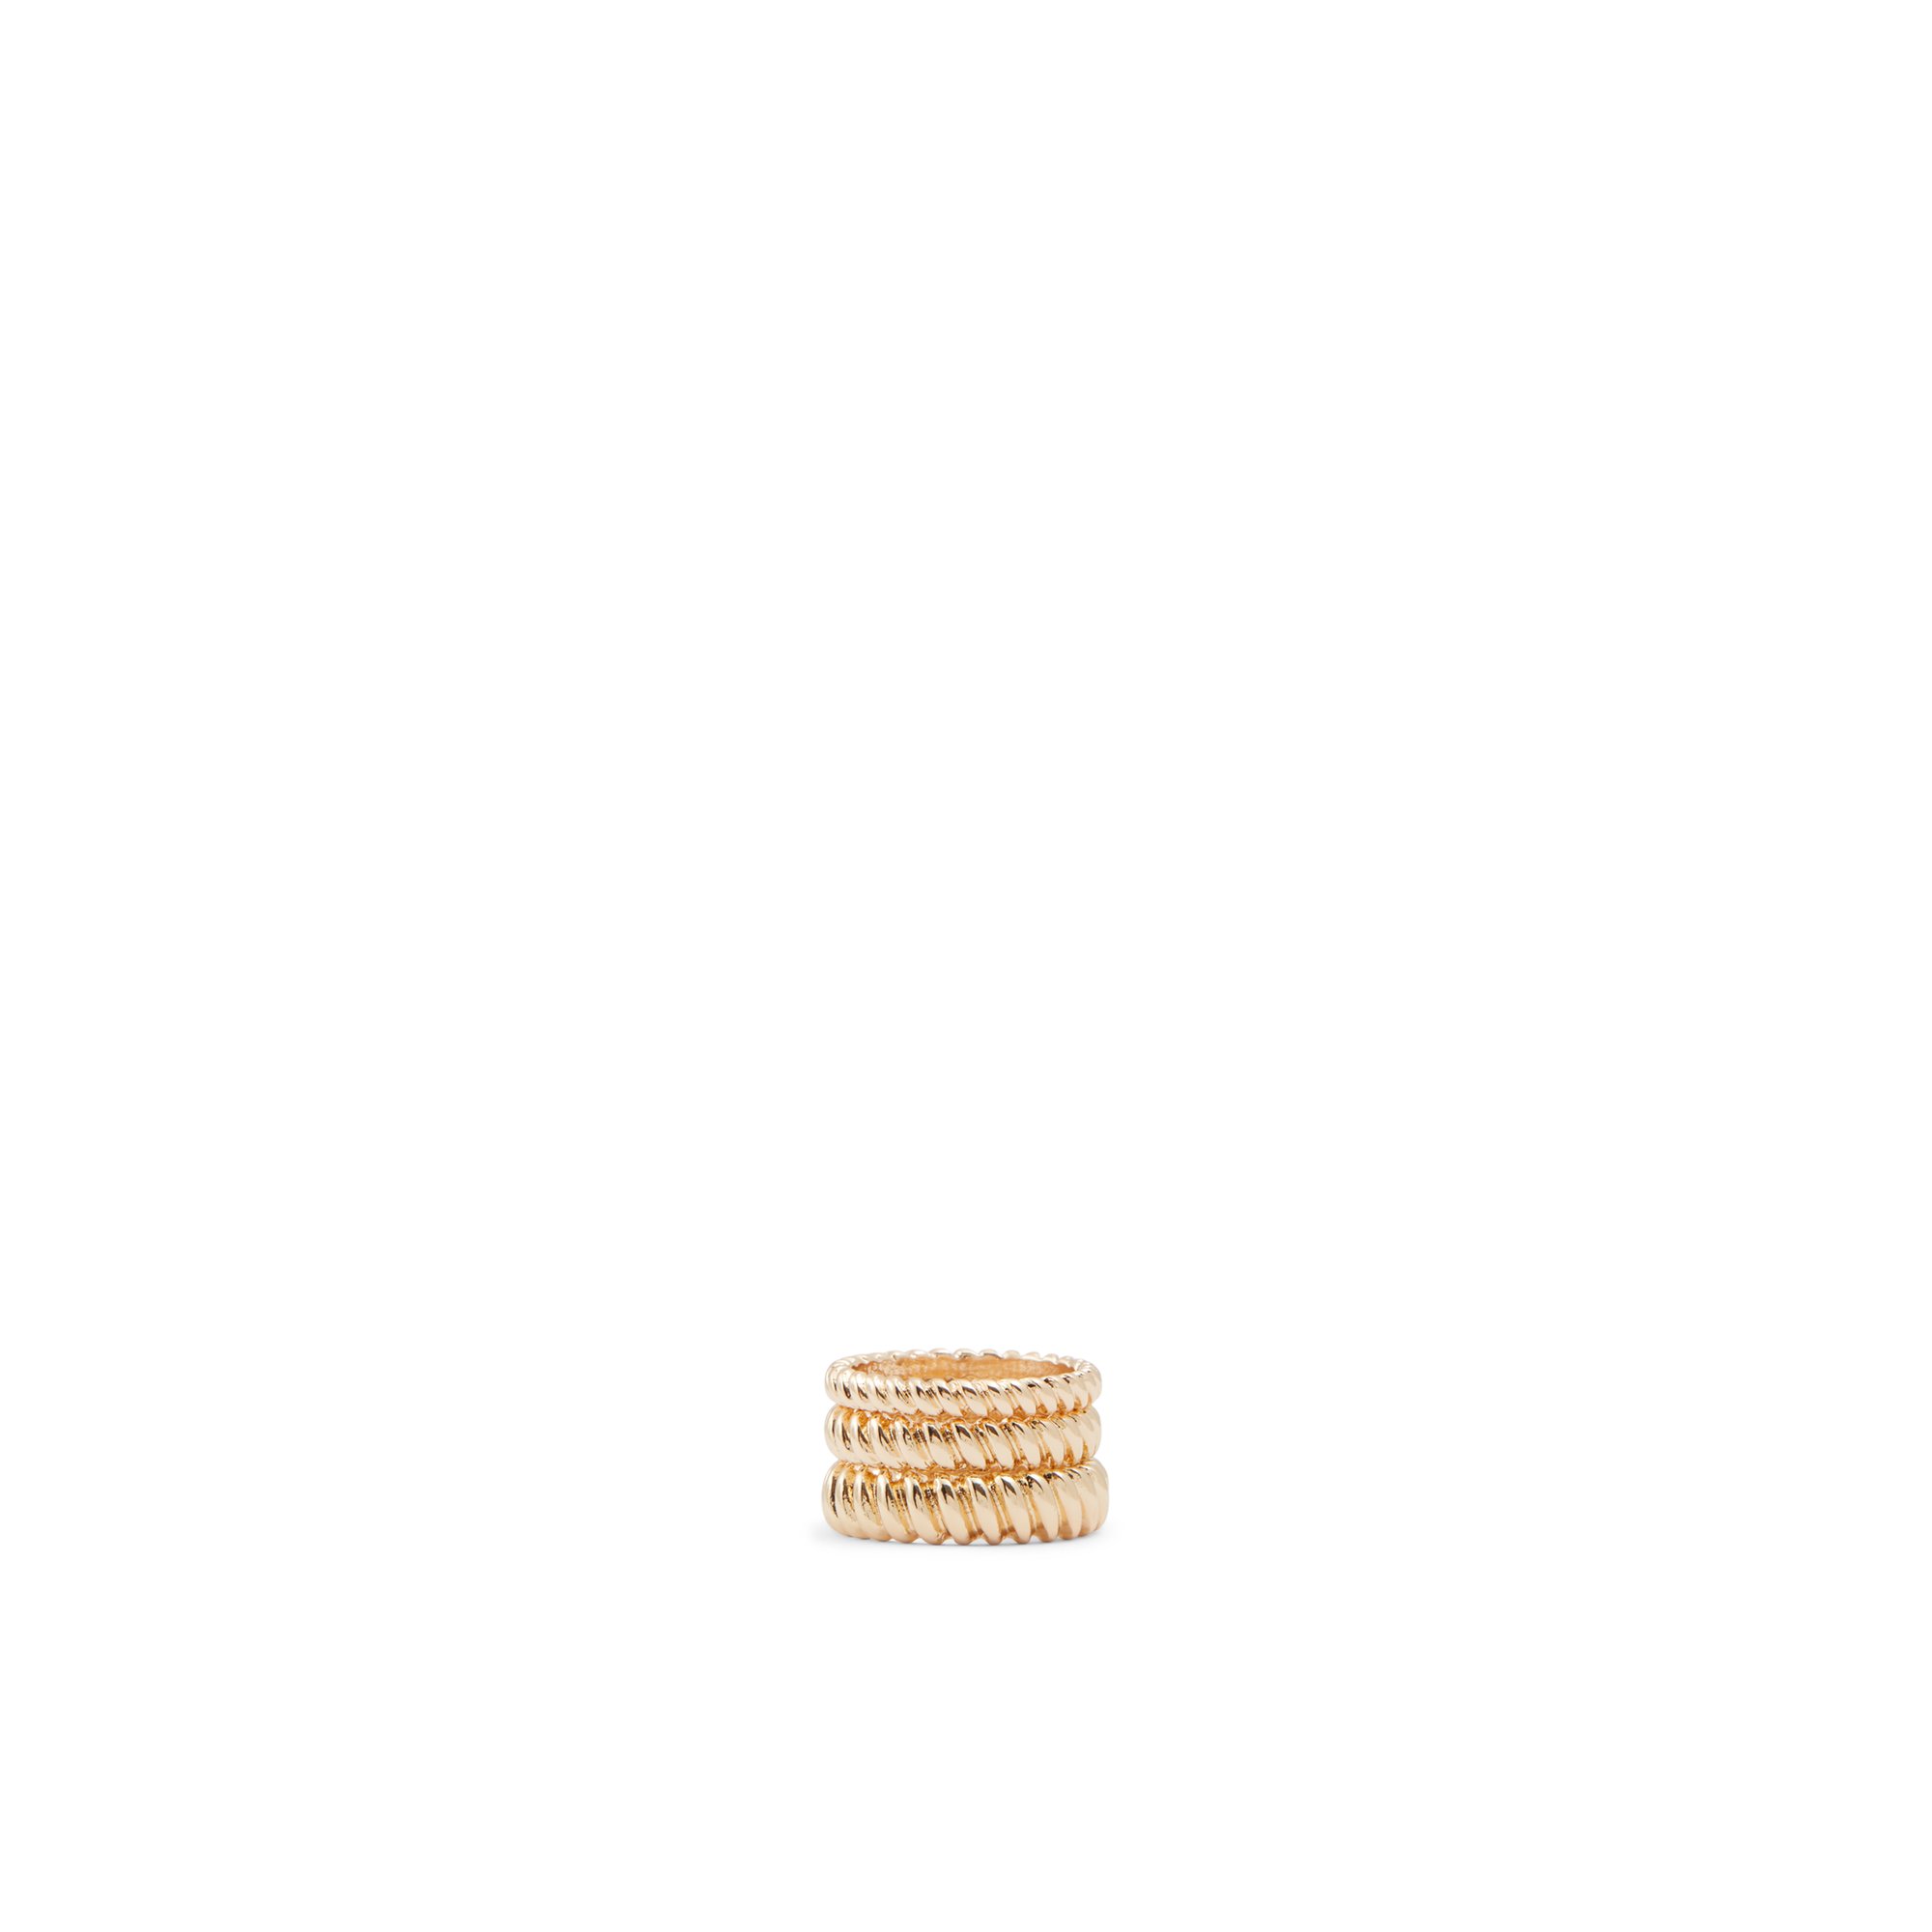 Image of ALDO Acardotlan - Women's Ring Jewelry - Gold, Size 7